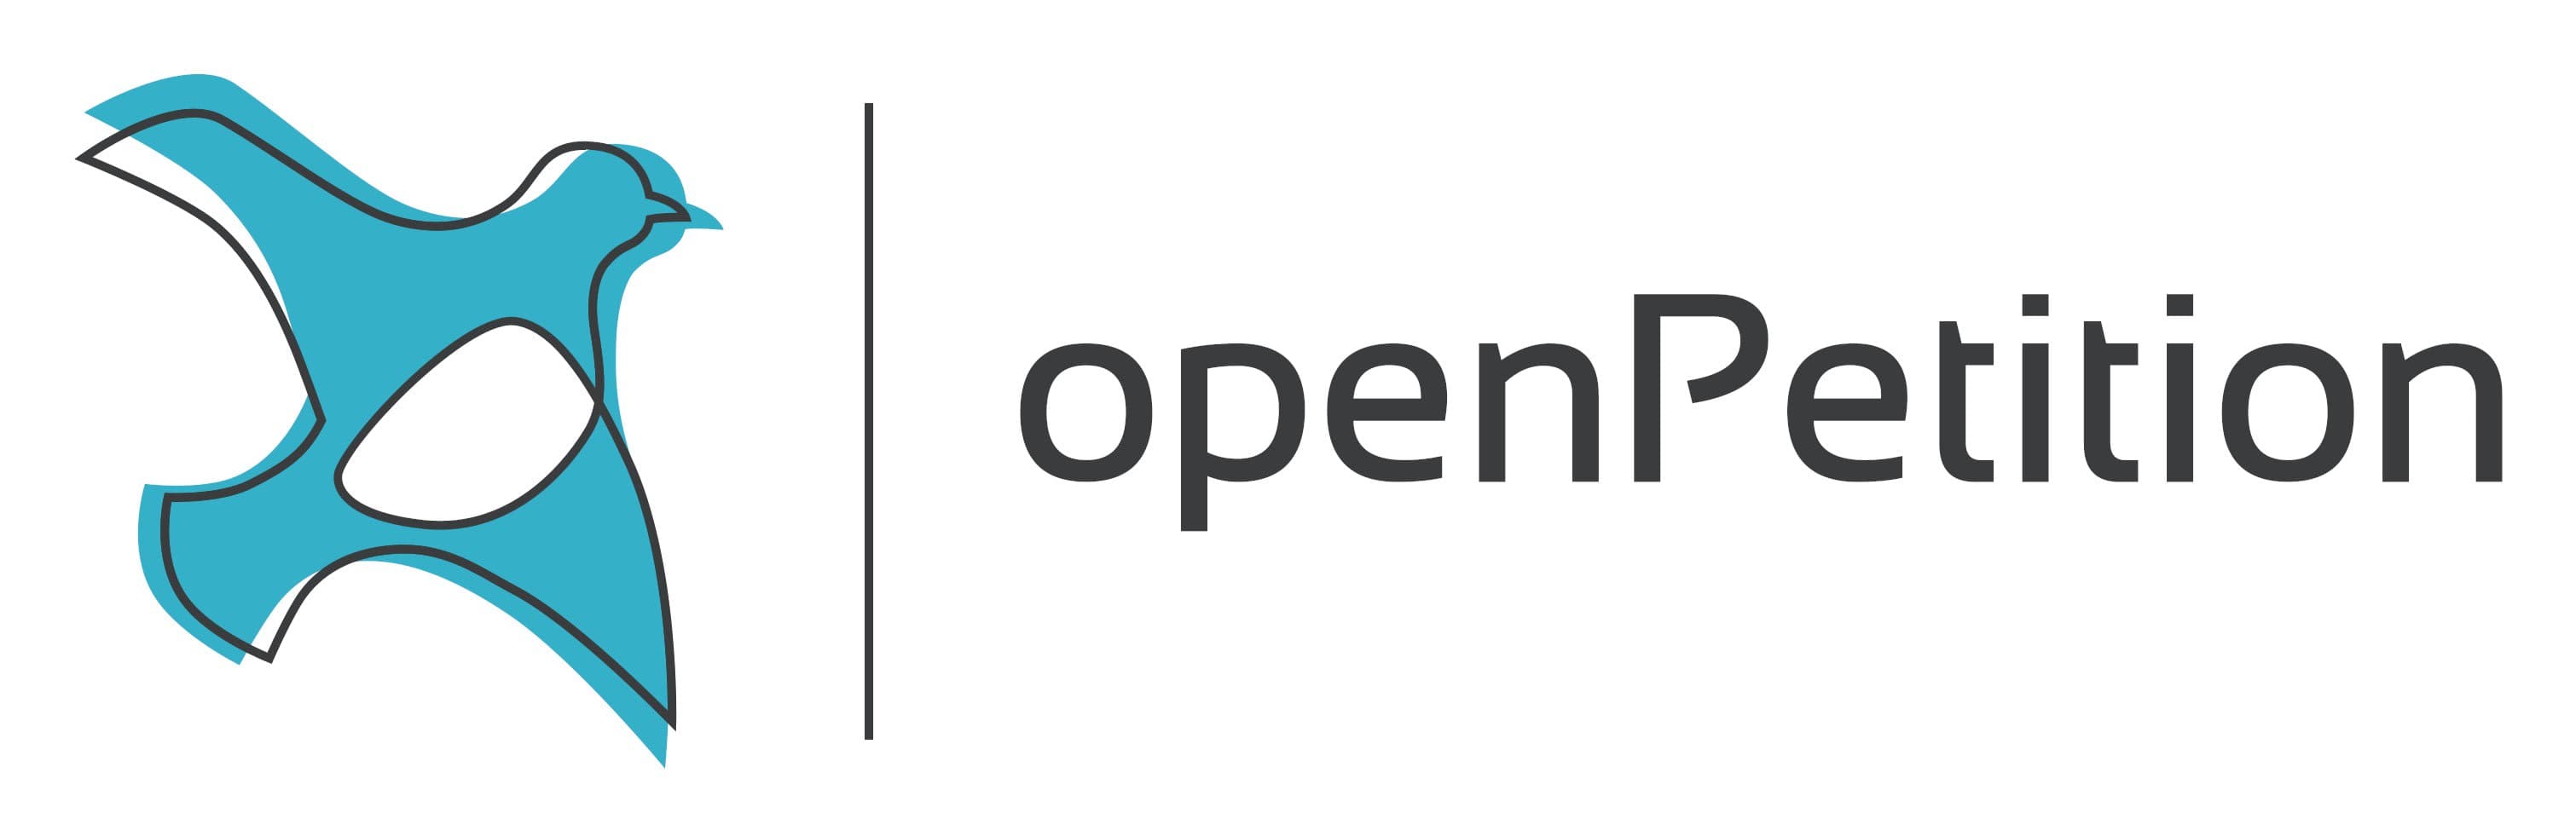 openPetition + logo